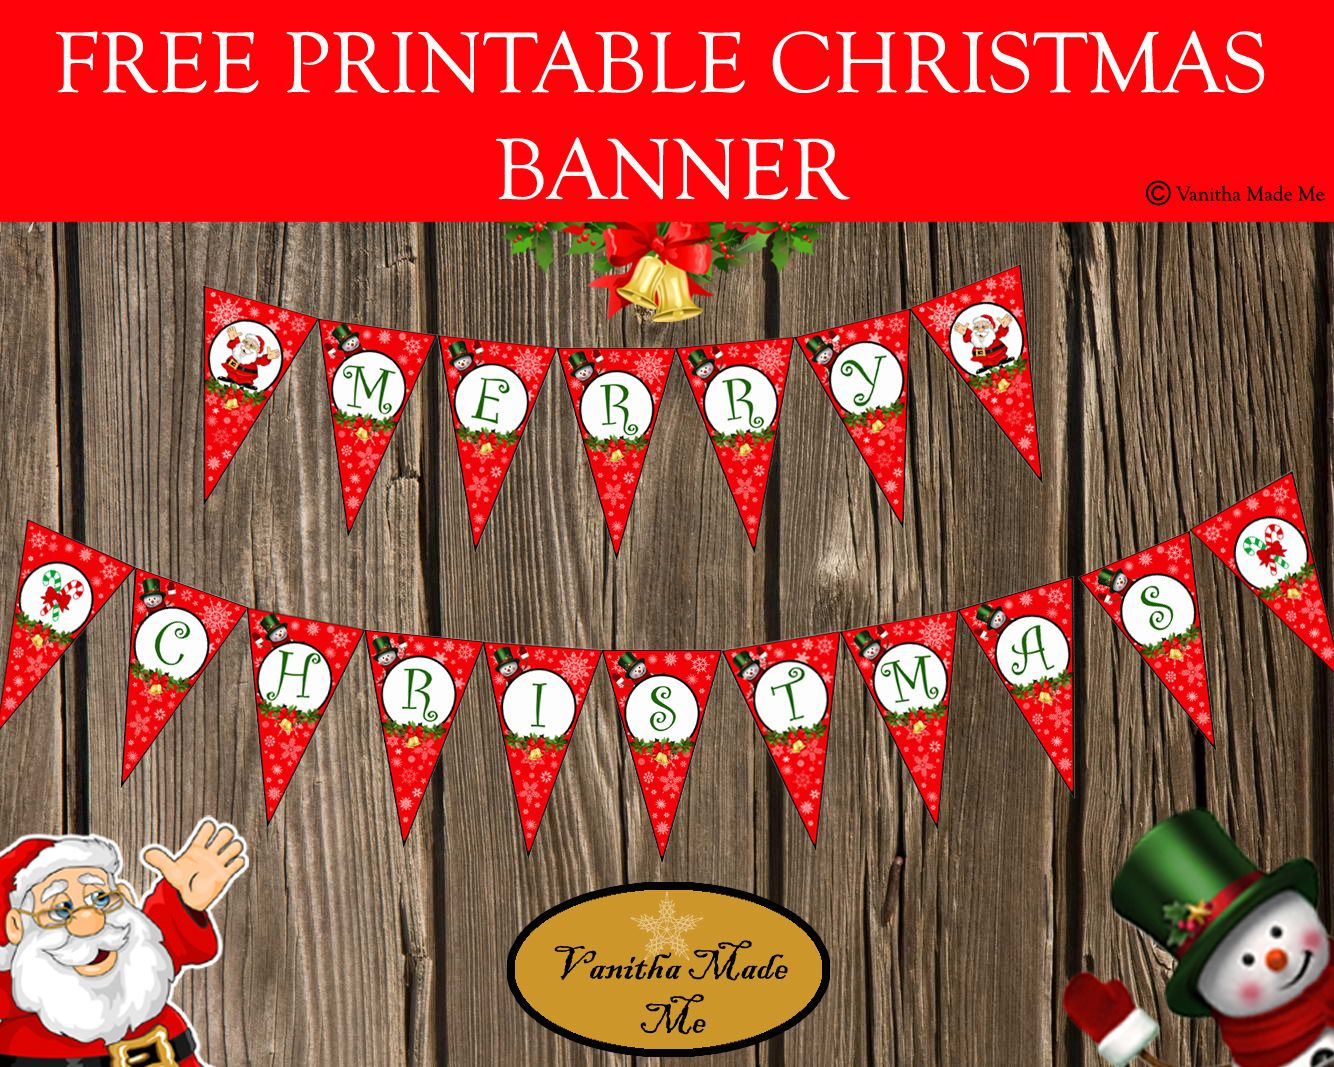 Free Printable Christmas Banner | Kreatívságok | Pinterest - Free Printable Christmas Banner